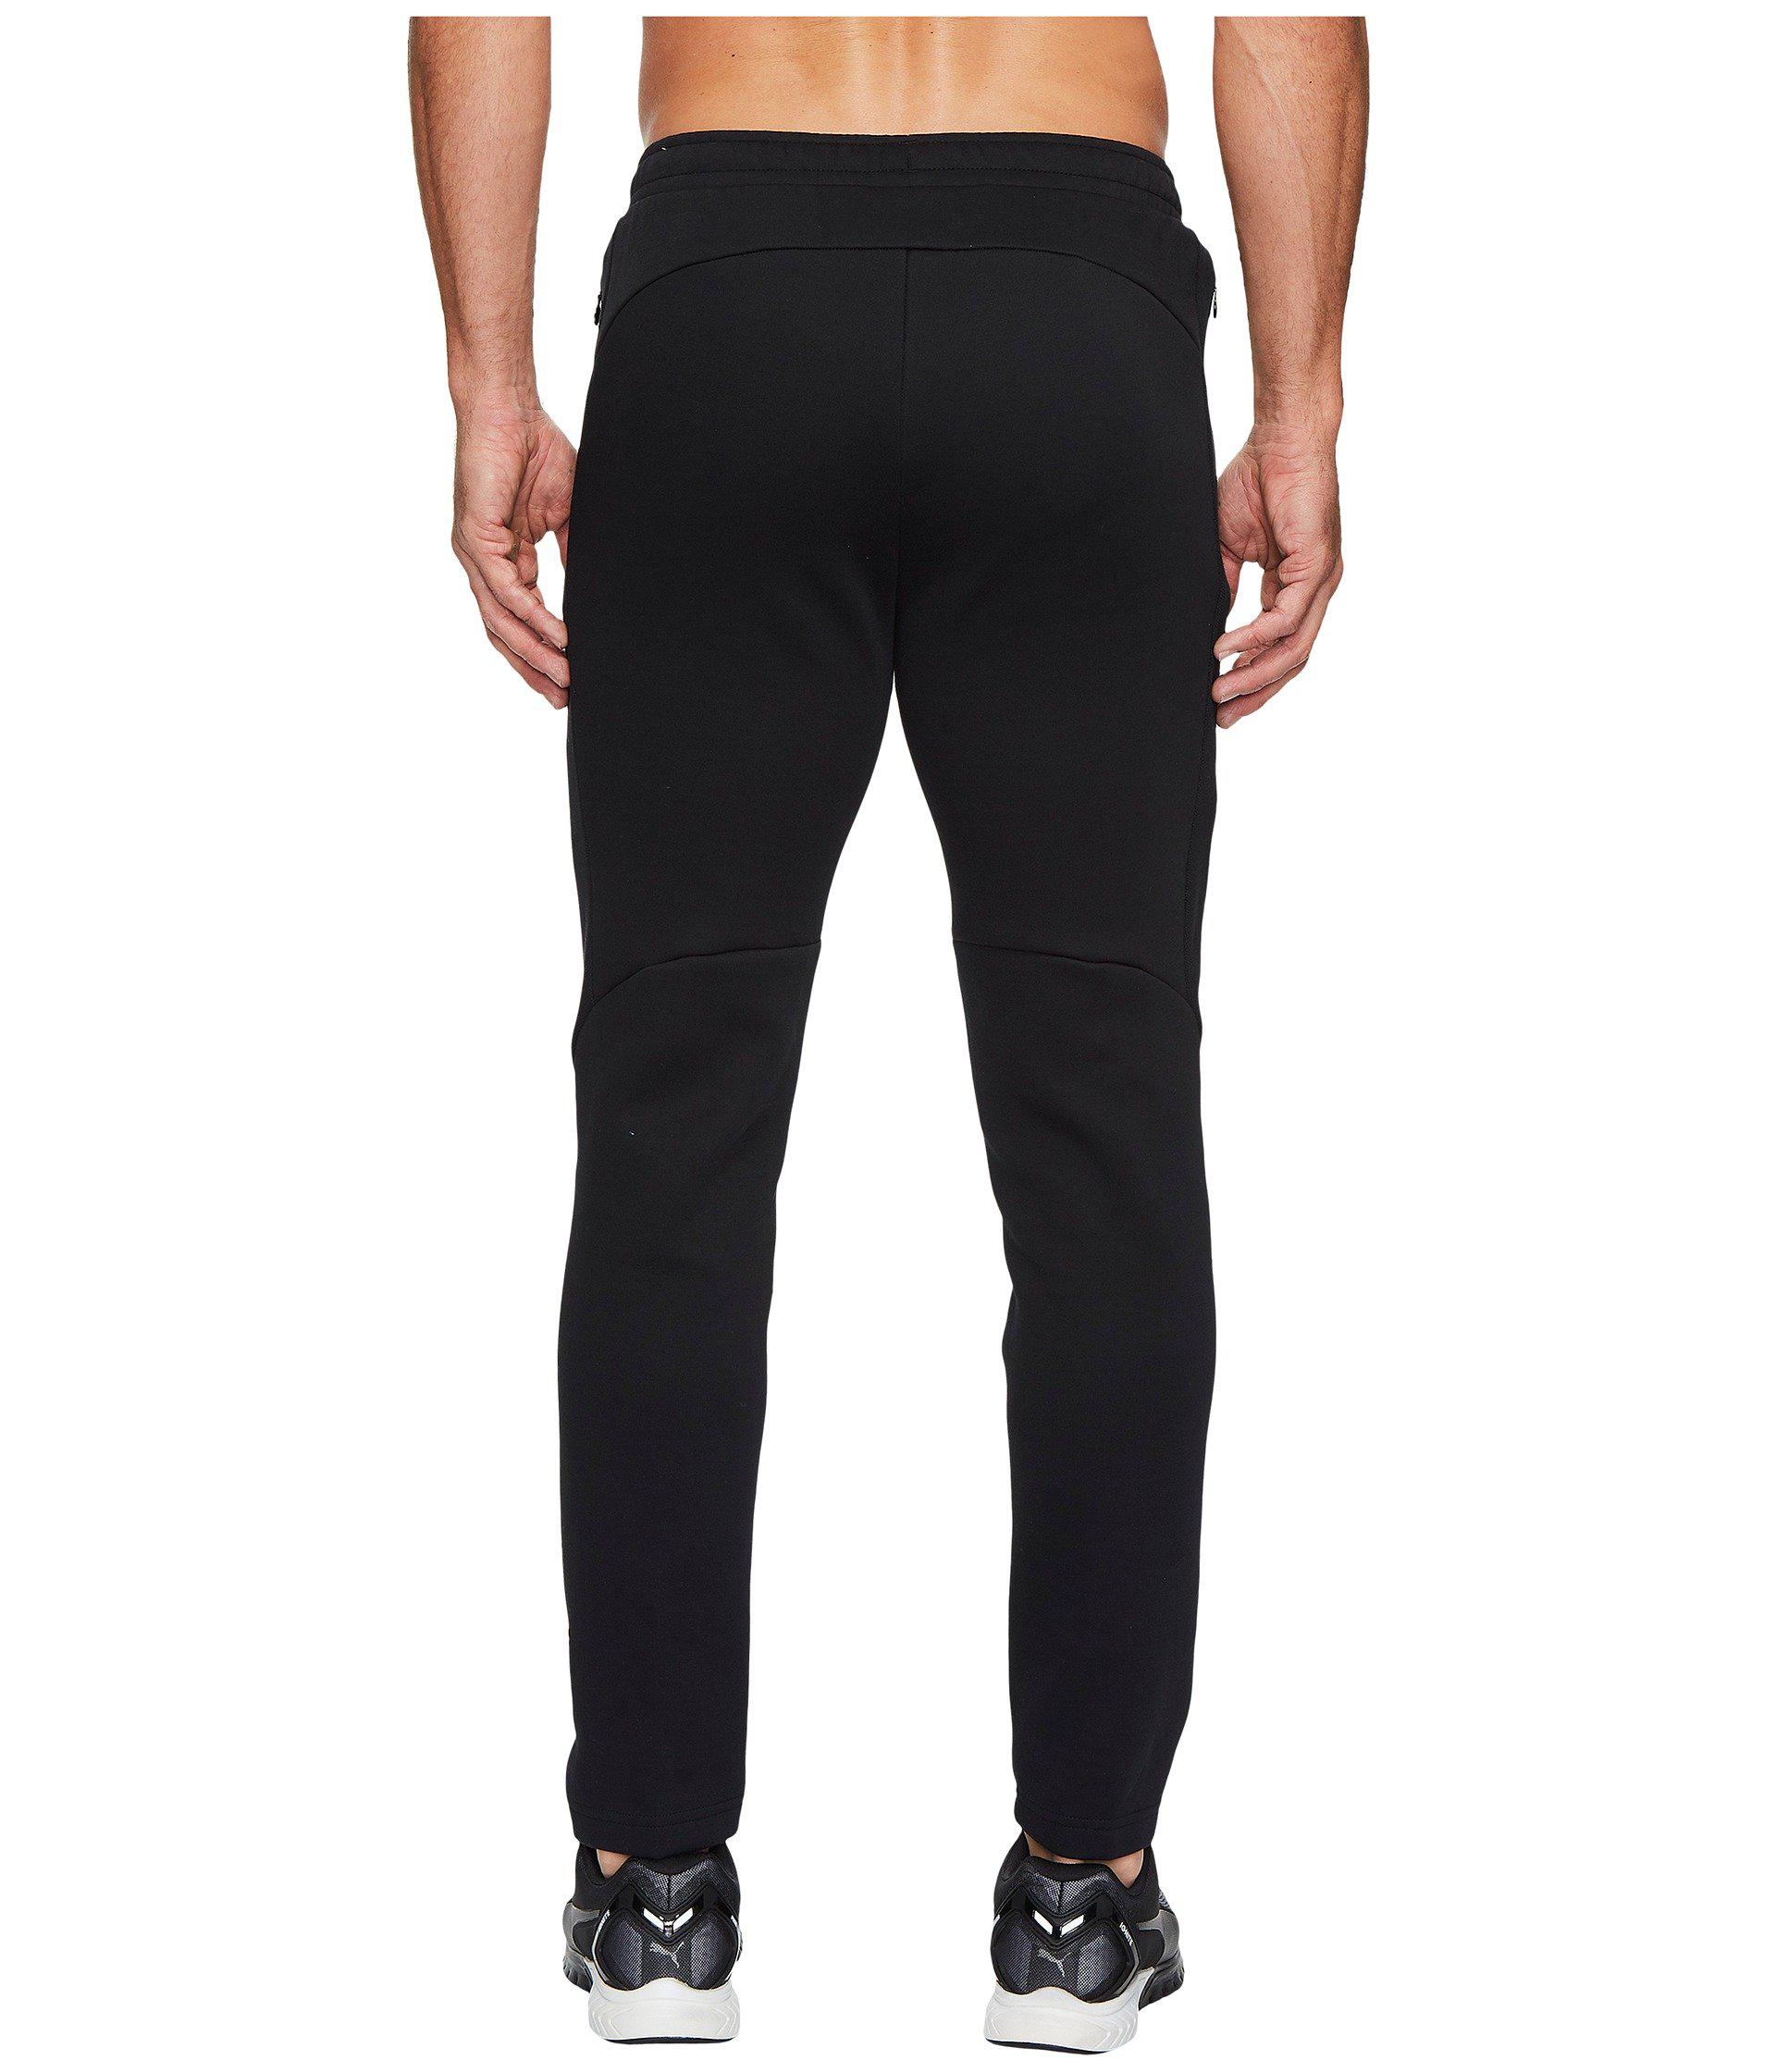 PUMA Stretch Lite Pants Open in Black for Men - Lyst